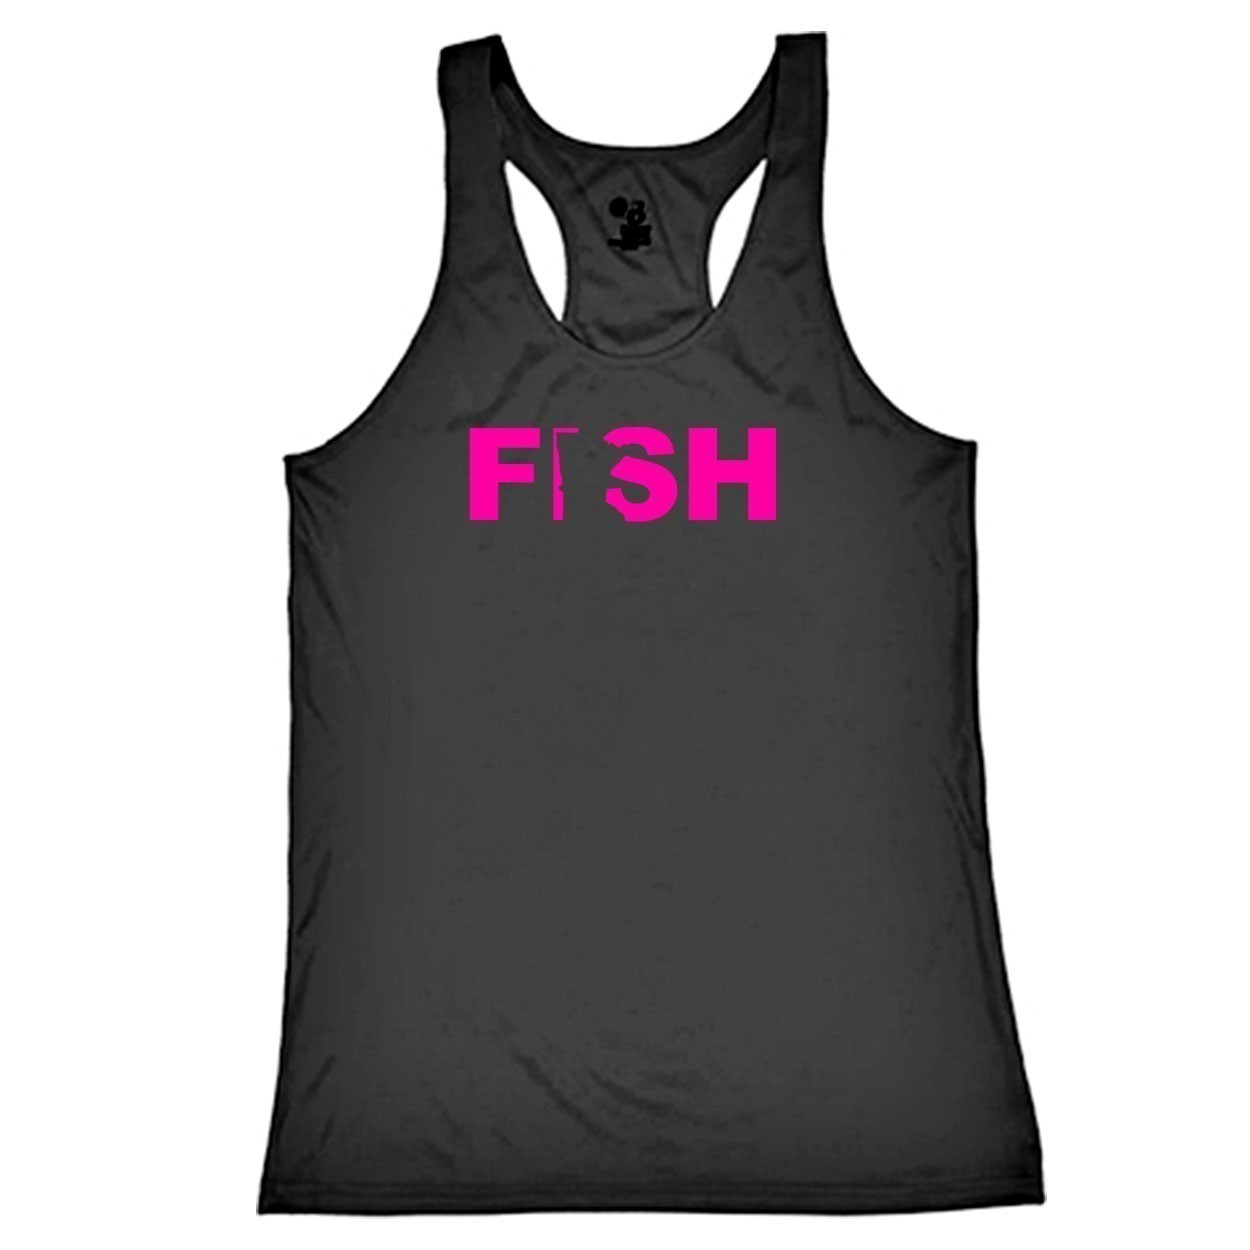 Fish Minnesota Classic Youth Girls Performance Racerback Tank Top Black (Pink Logo)